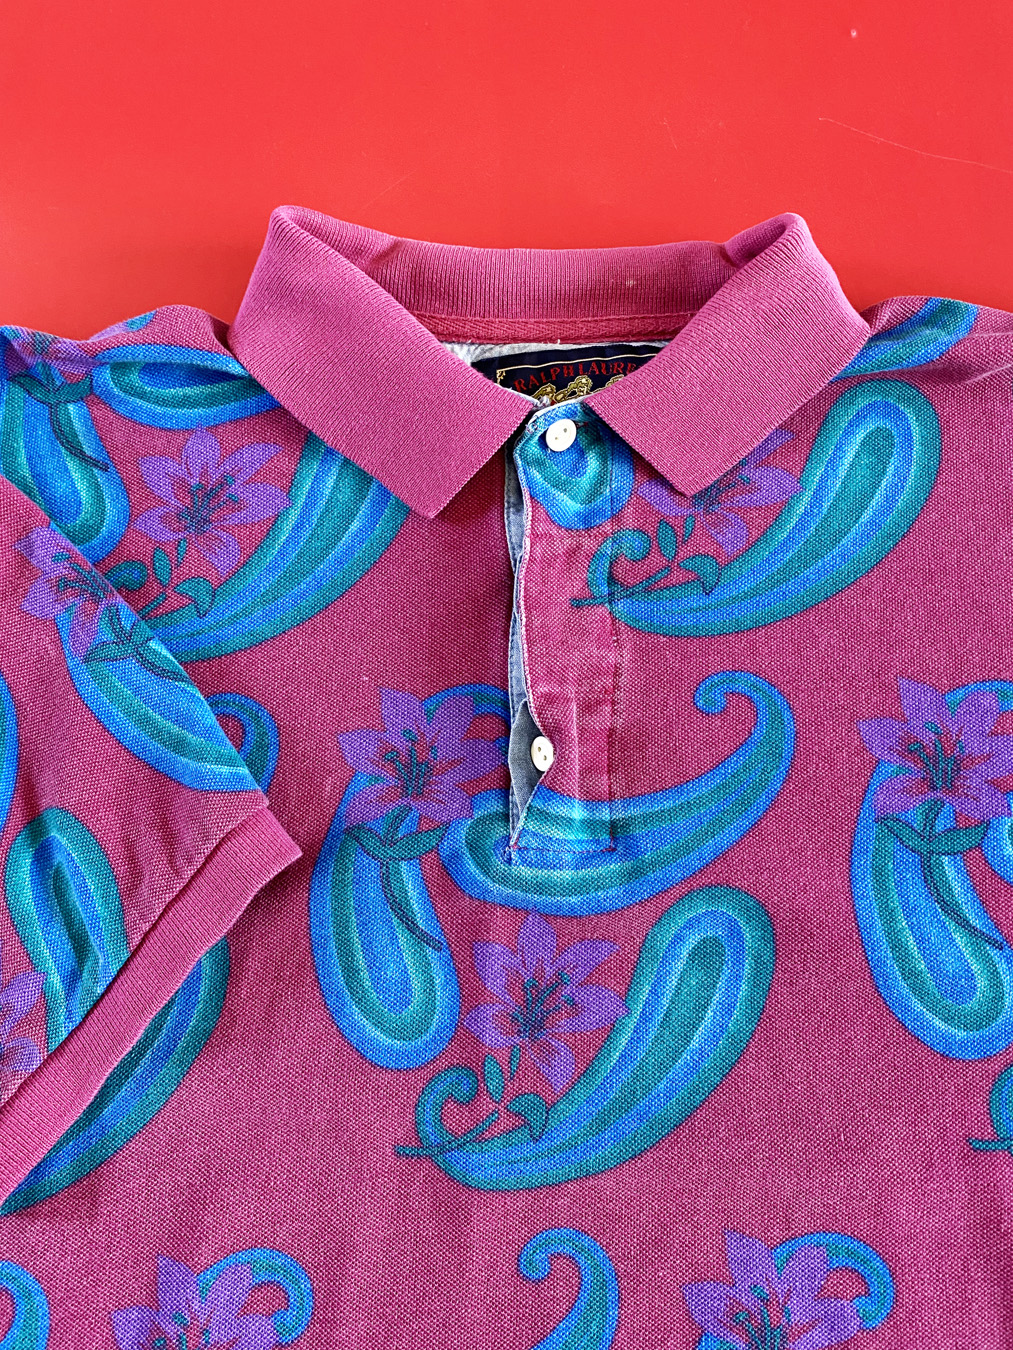 90s Chaps Ralph Lauren Pink Paisley Polo Shirt - 5 Star Vintage